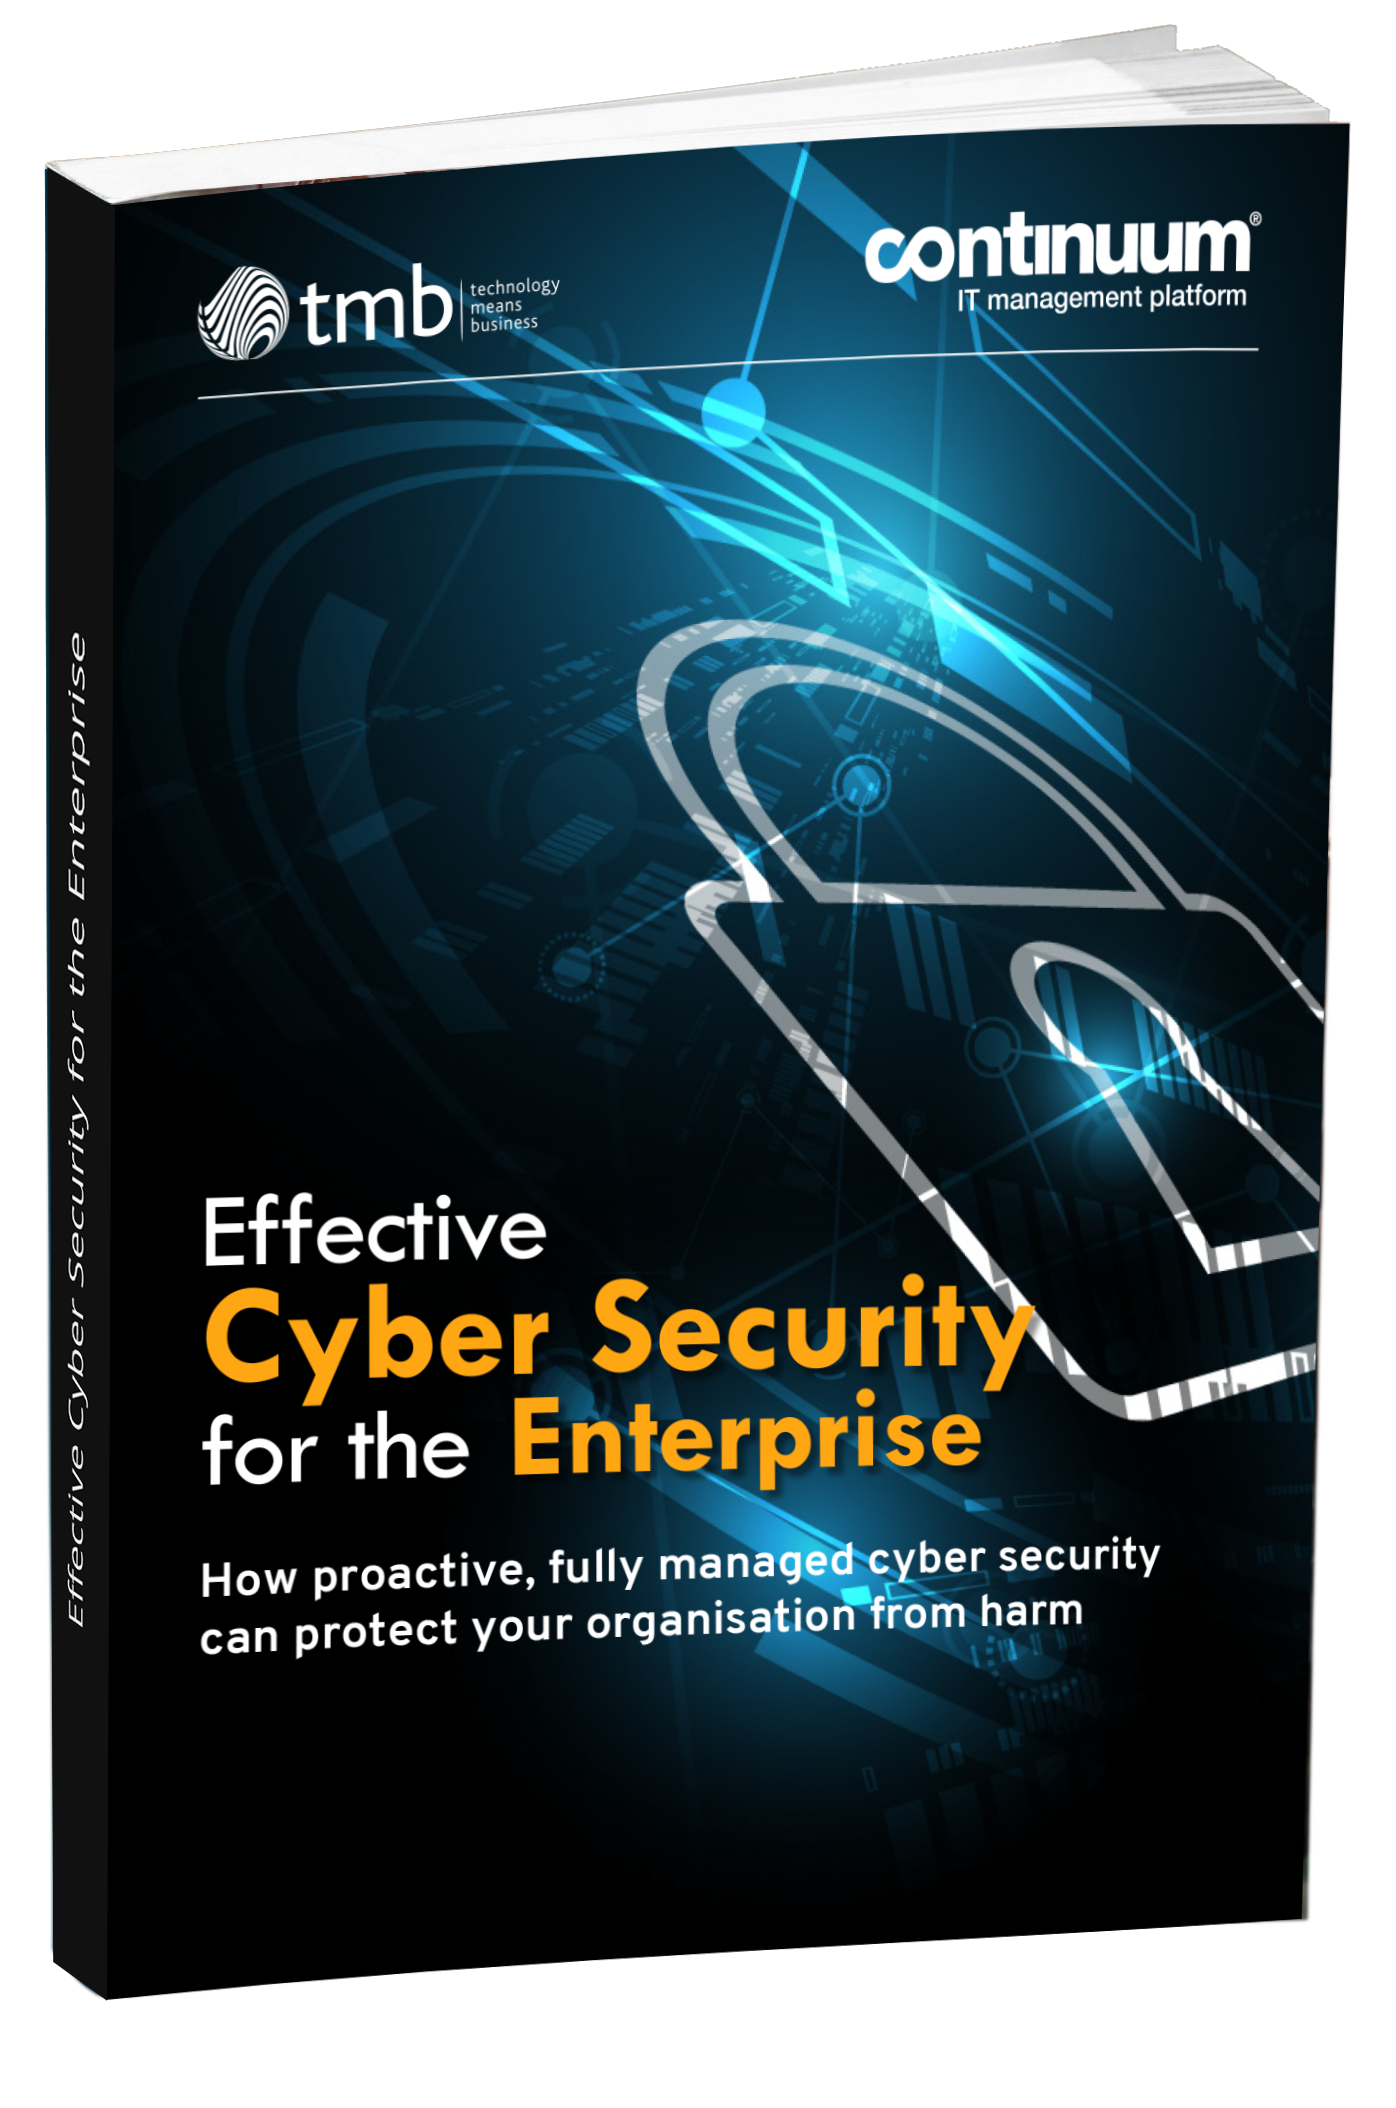 Enterprise Cyber security